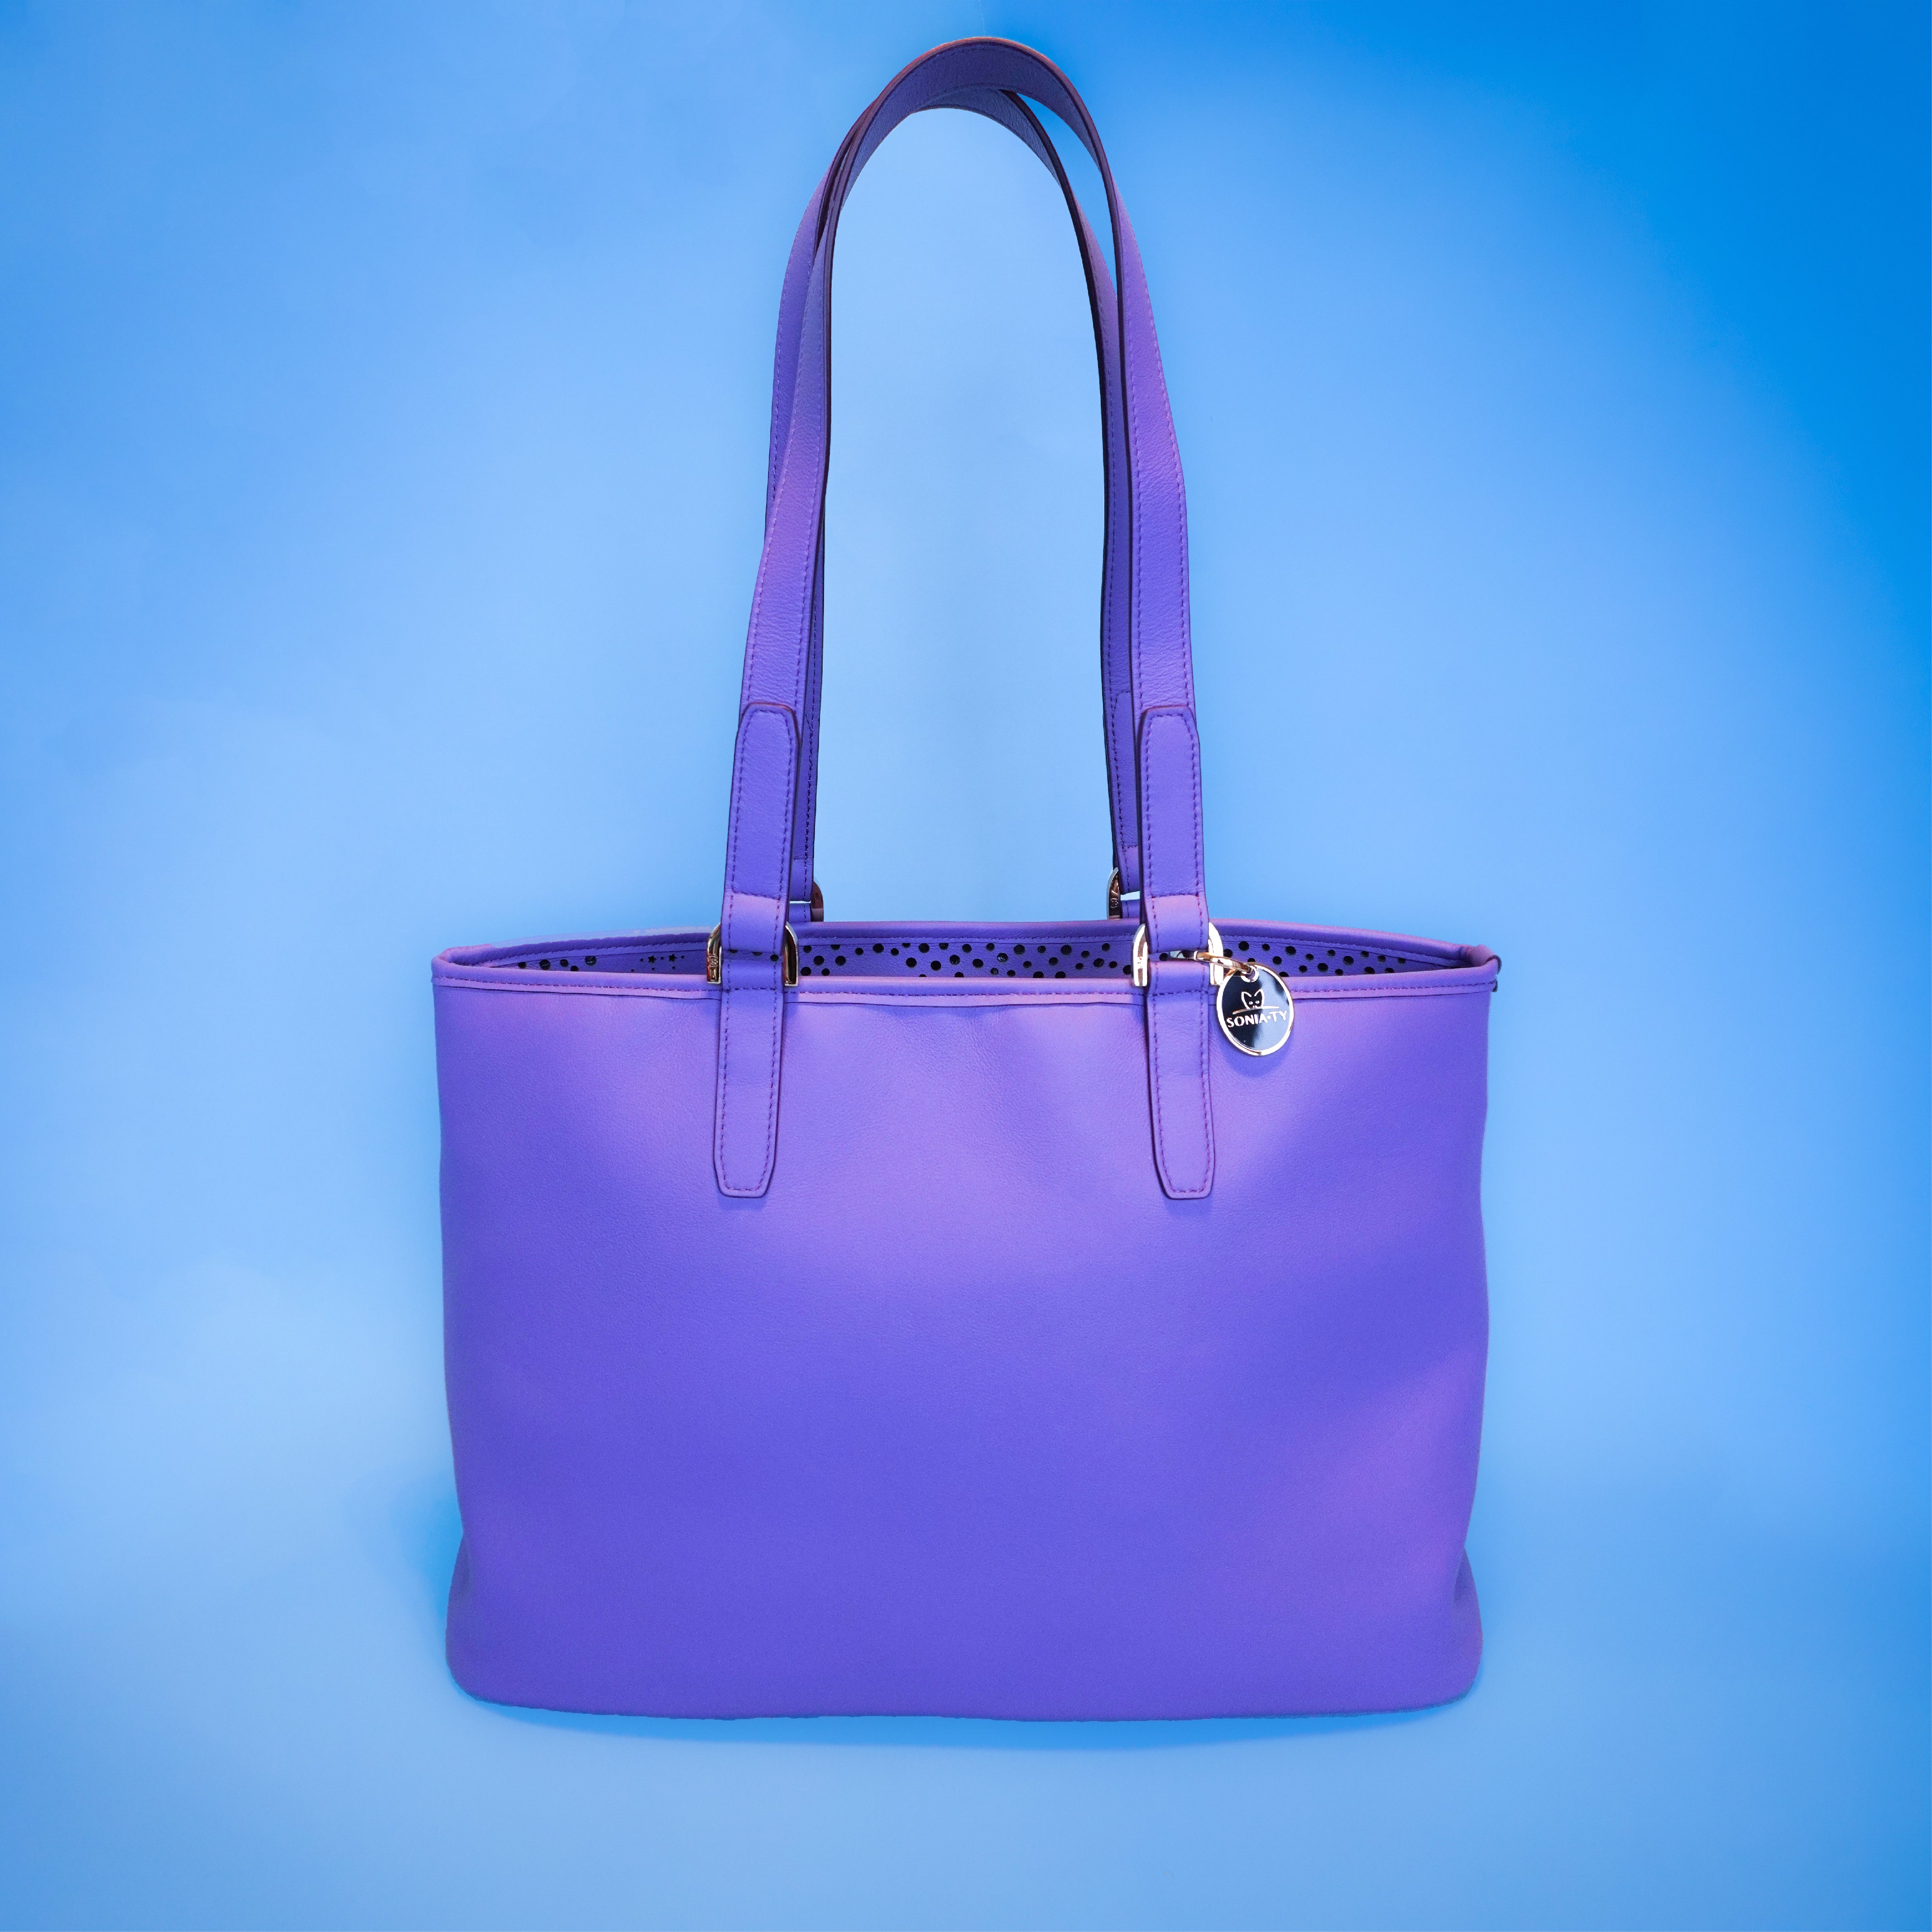 Best Louis Vuitton Handbags for Moms - Sonia Begonia